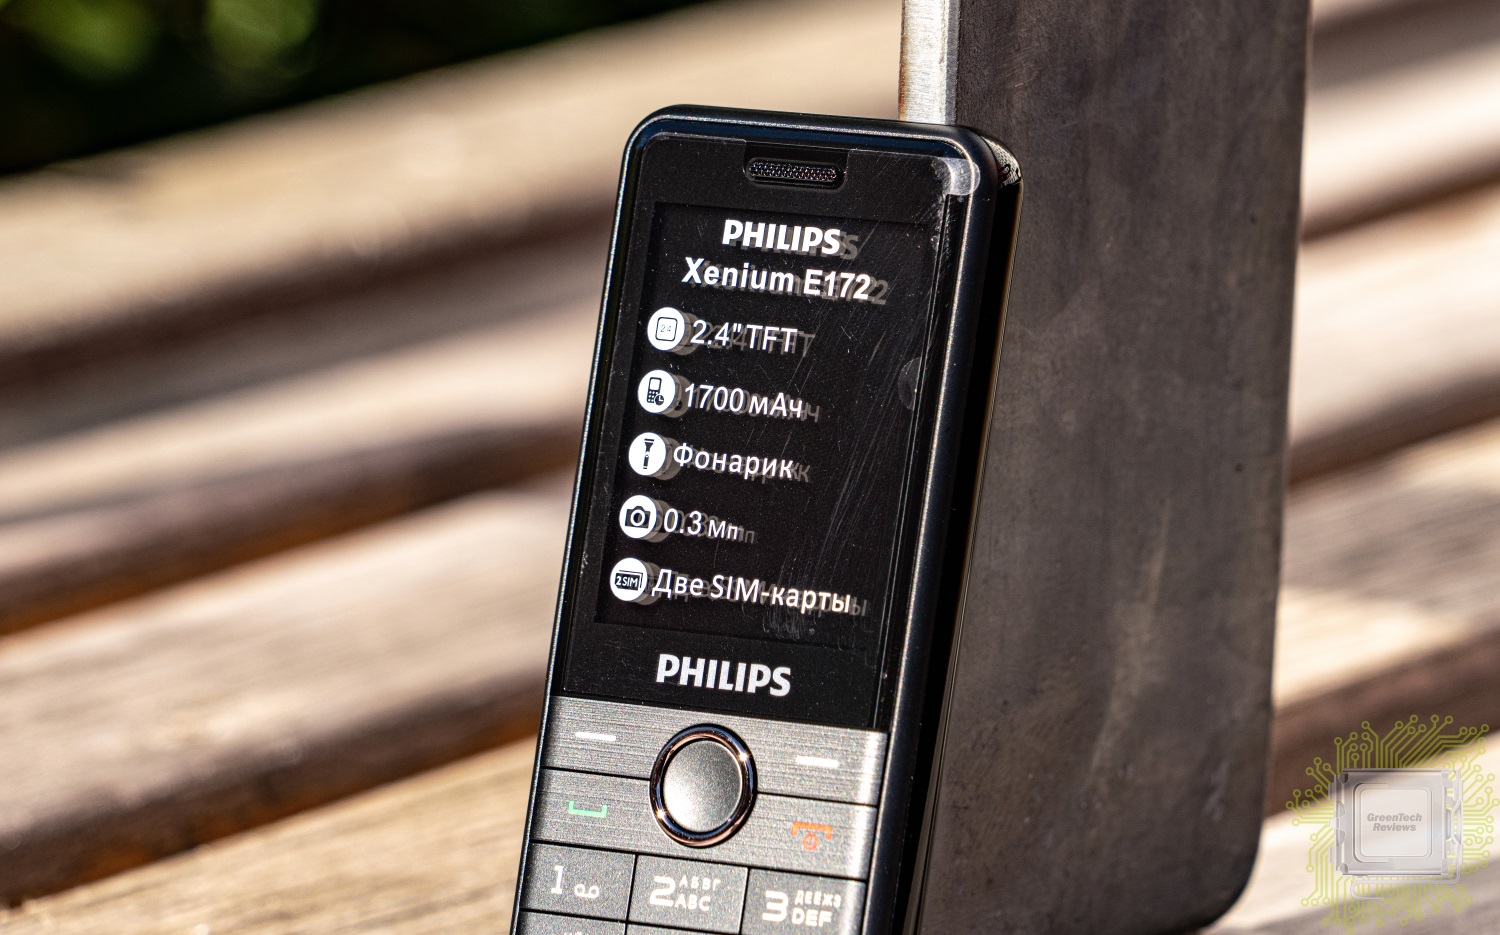 Xenium e590 купить. Philips Xenium e172. Philips Xenium e172 черный. Philips Xenium e590. Philips Xenium 172.